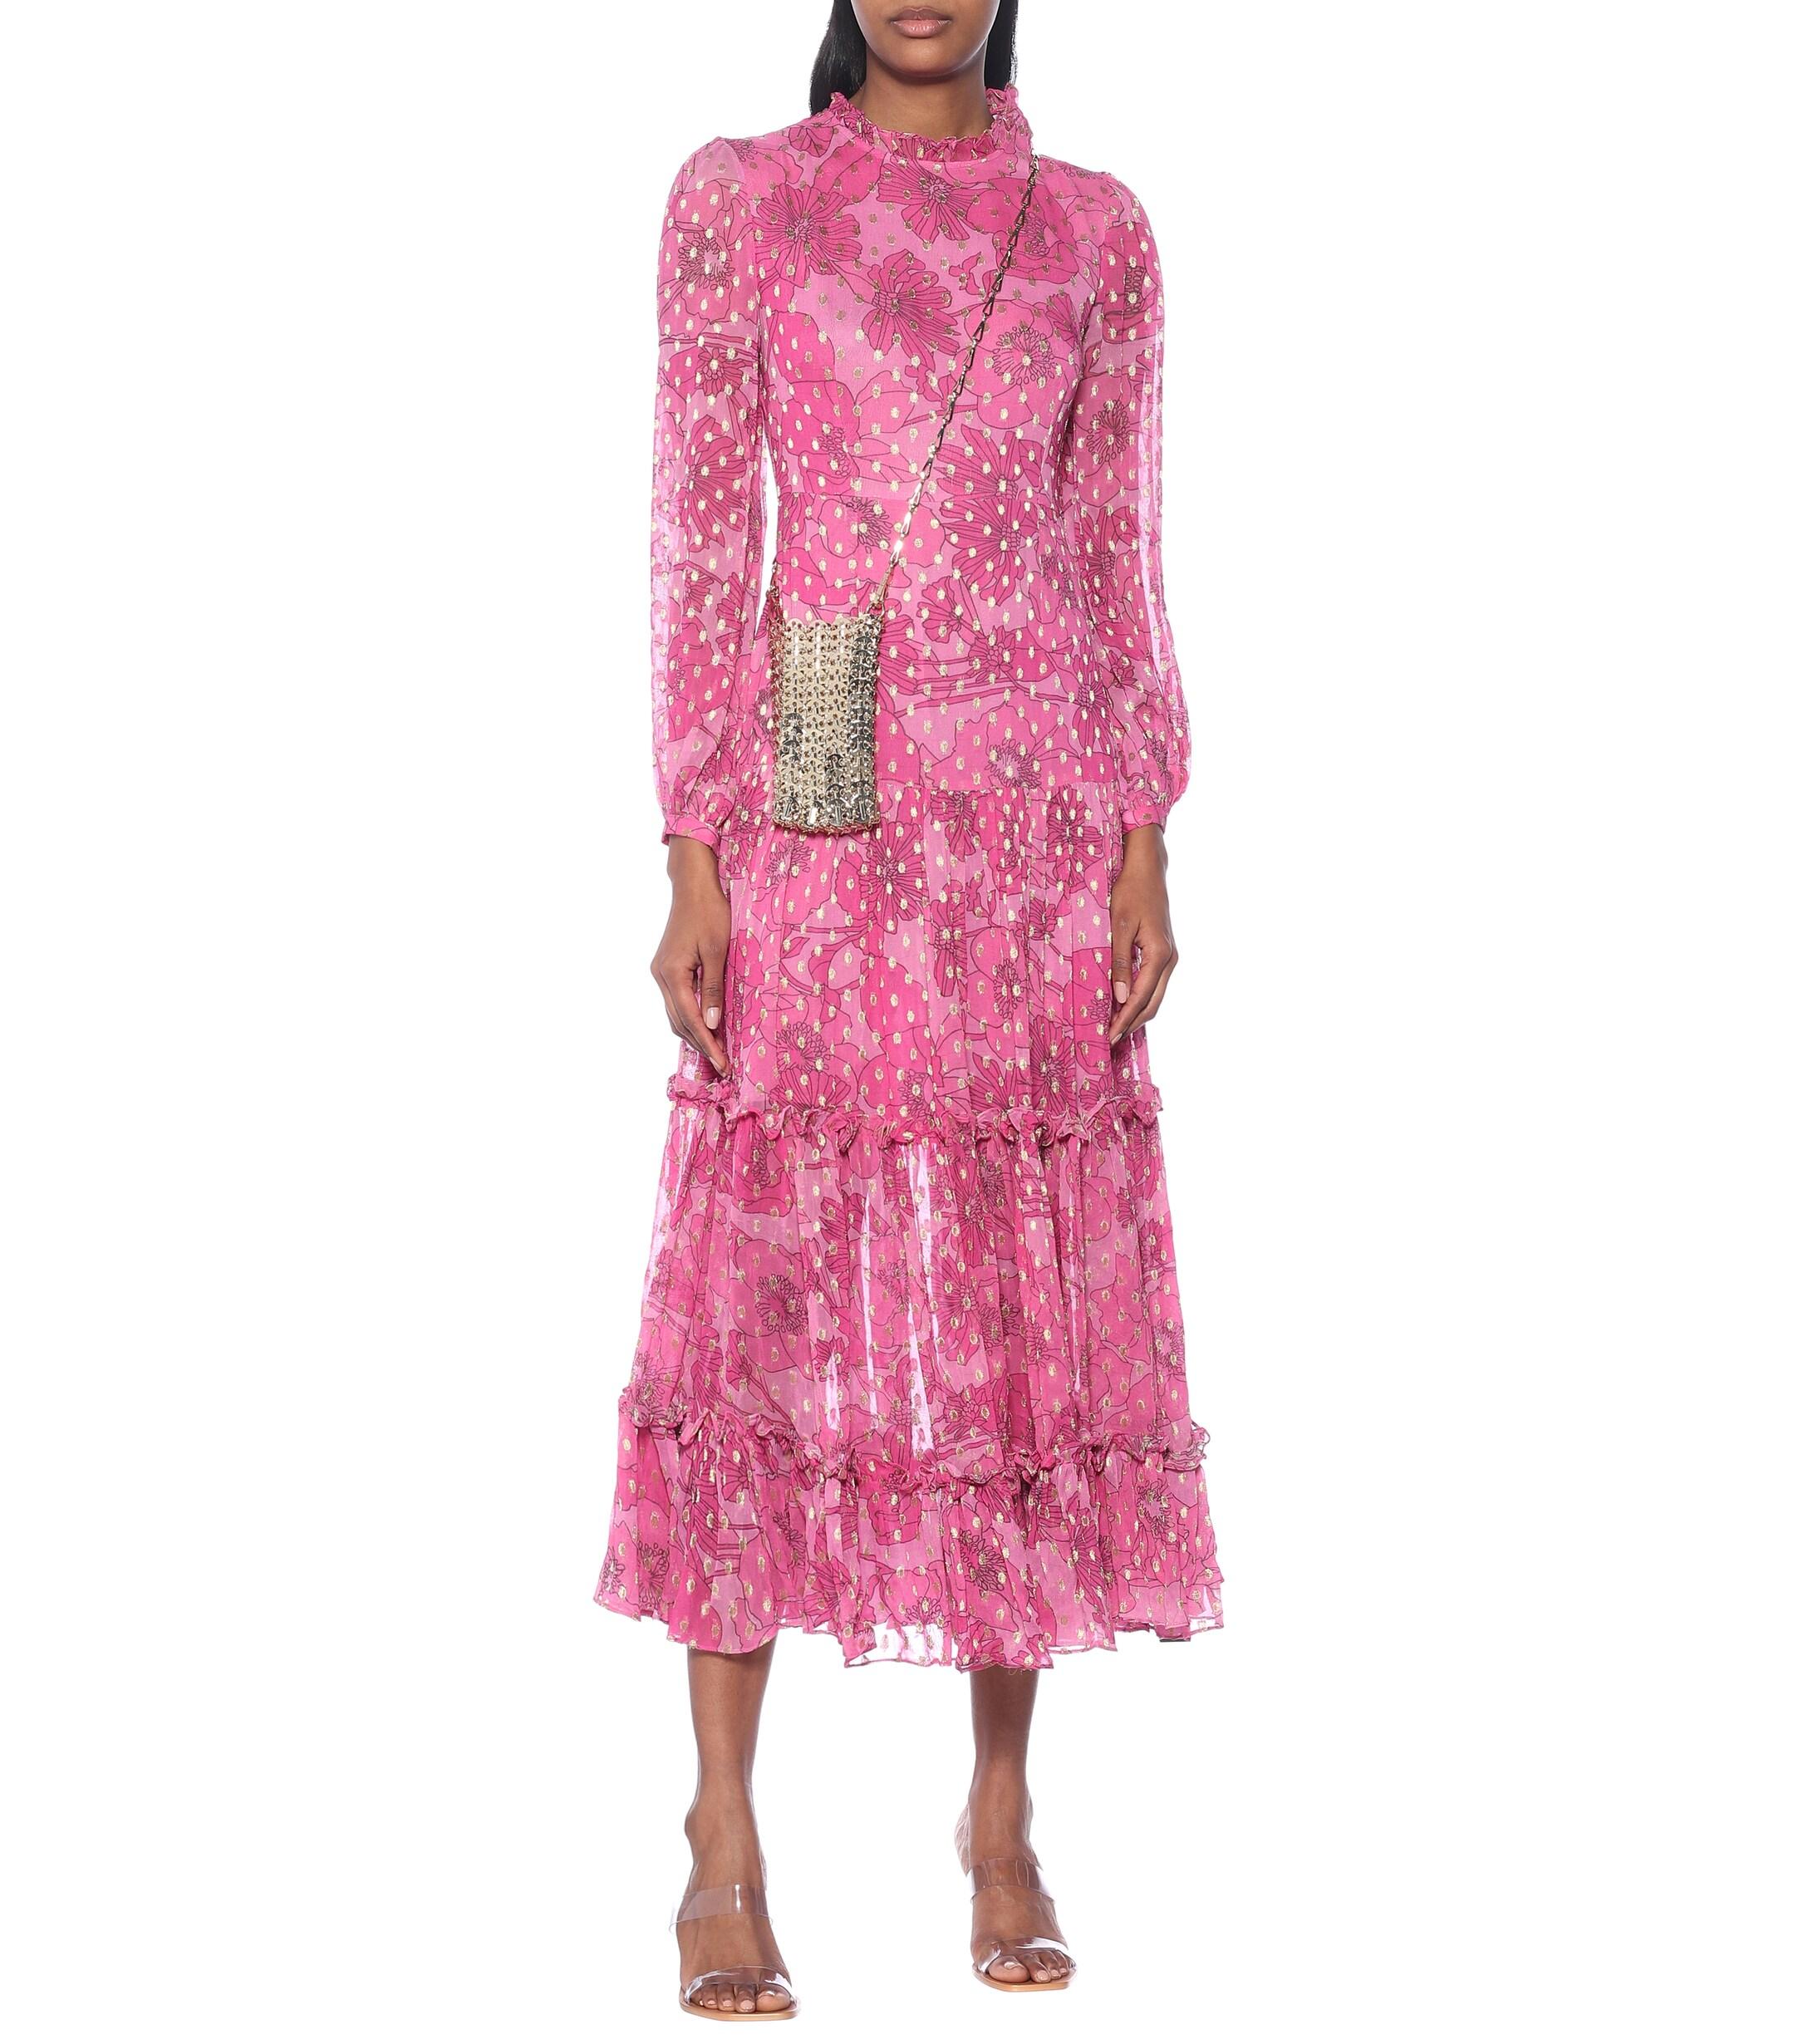 RIXO London Becky Floral Midi Dress in Pink - Lyst